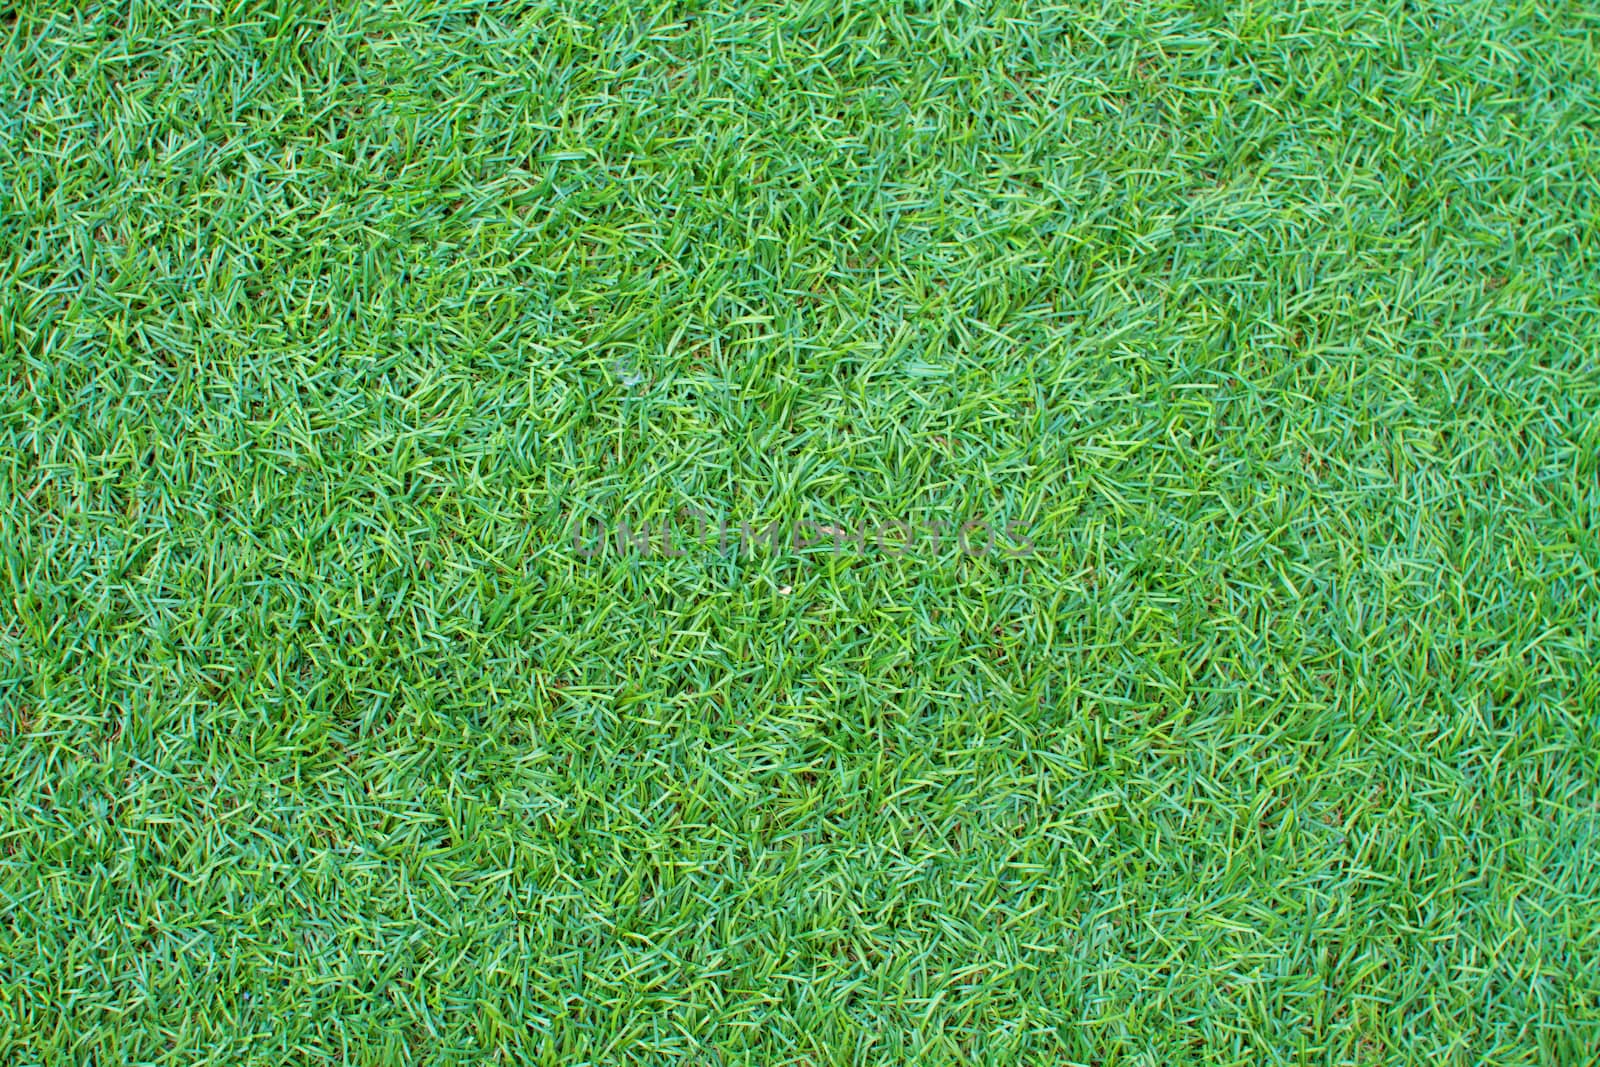 Grass green color.